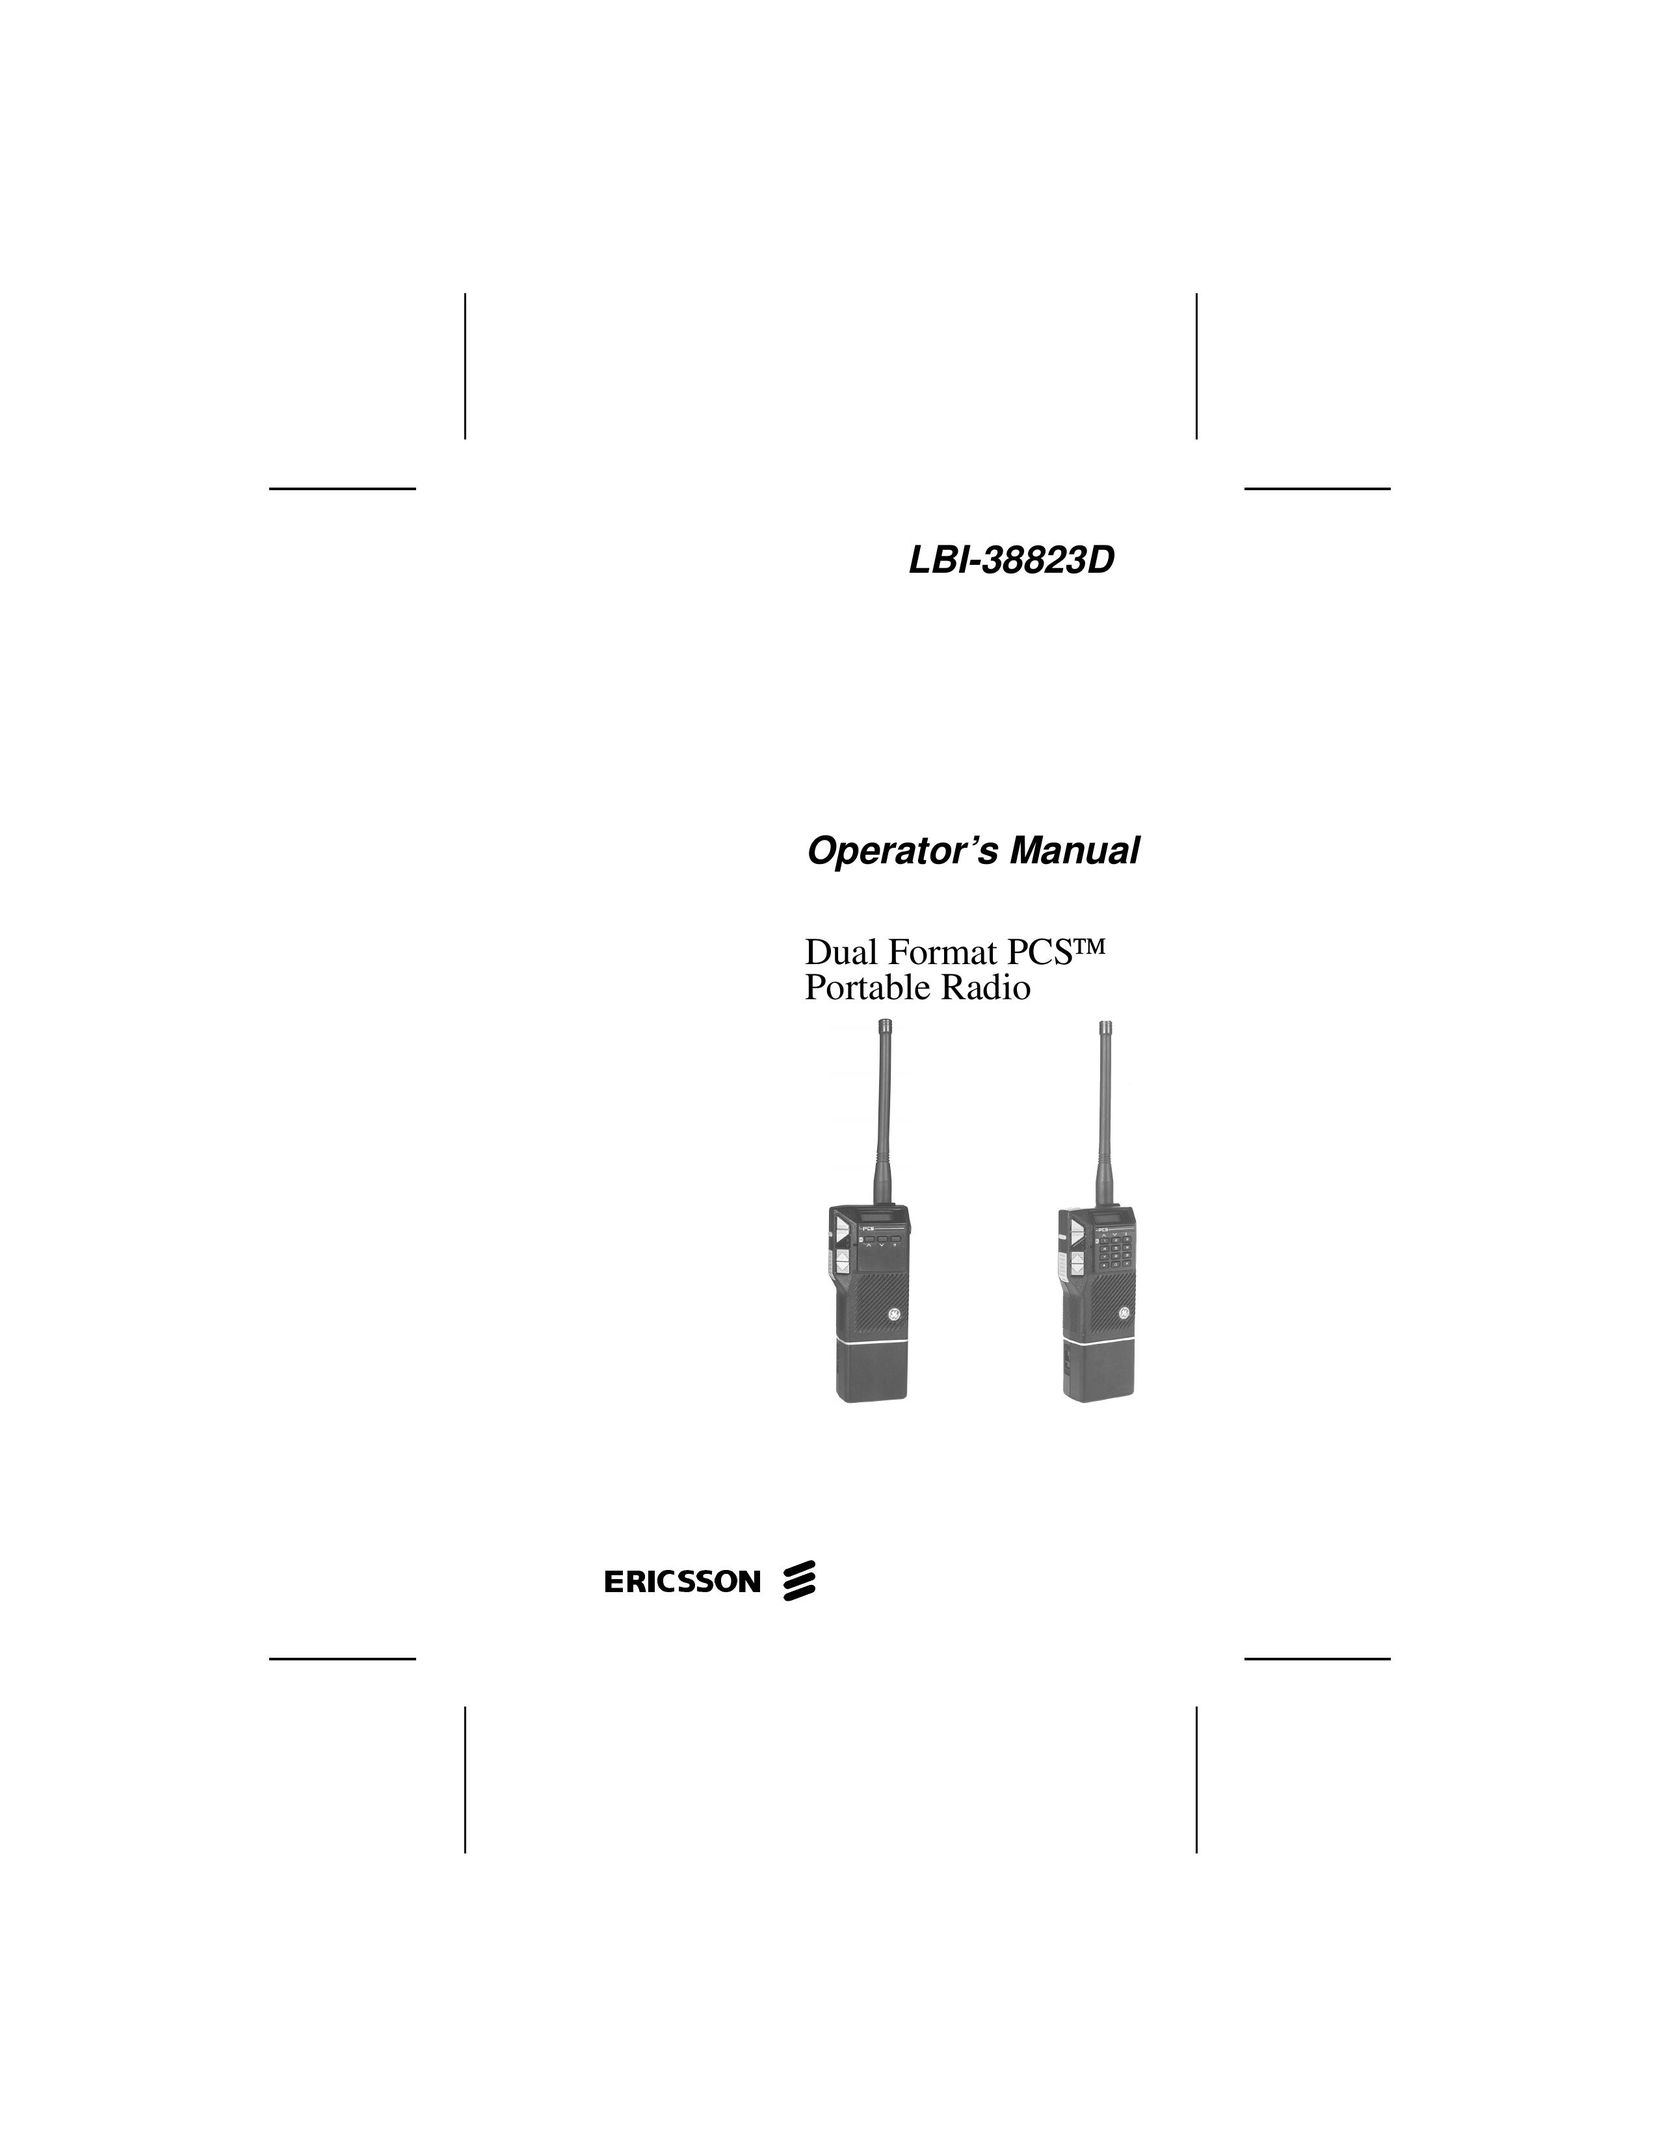 Ericsson LBI-38823D Portable Radio User Manual